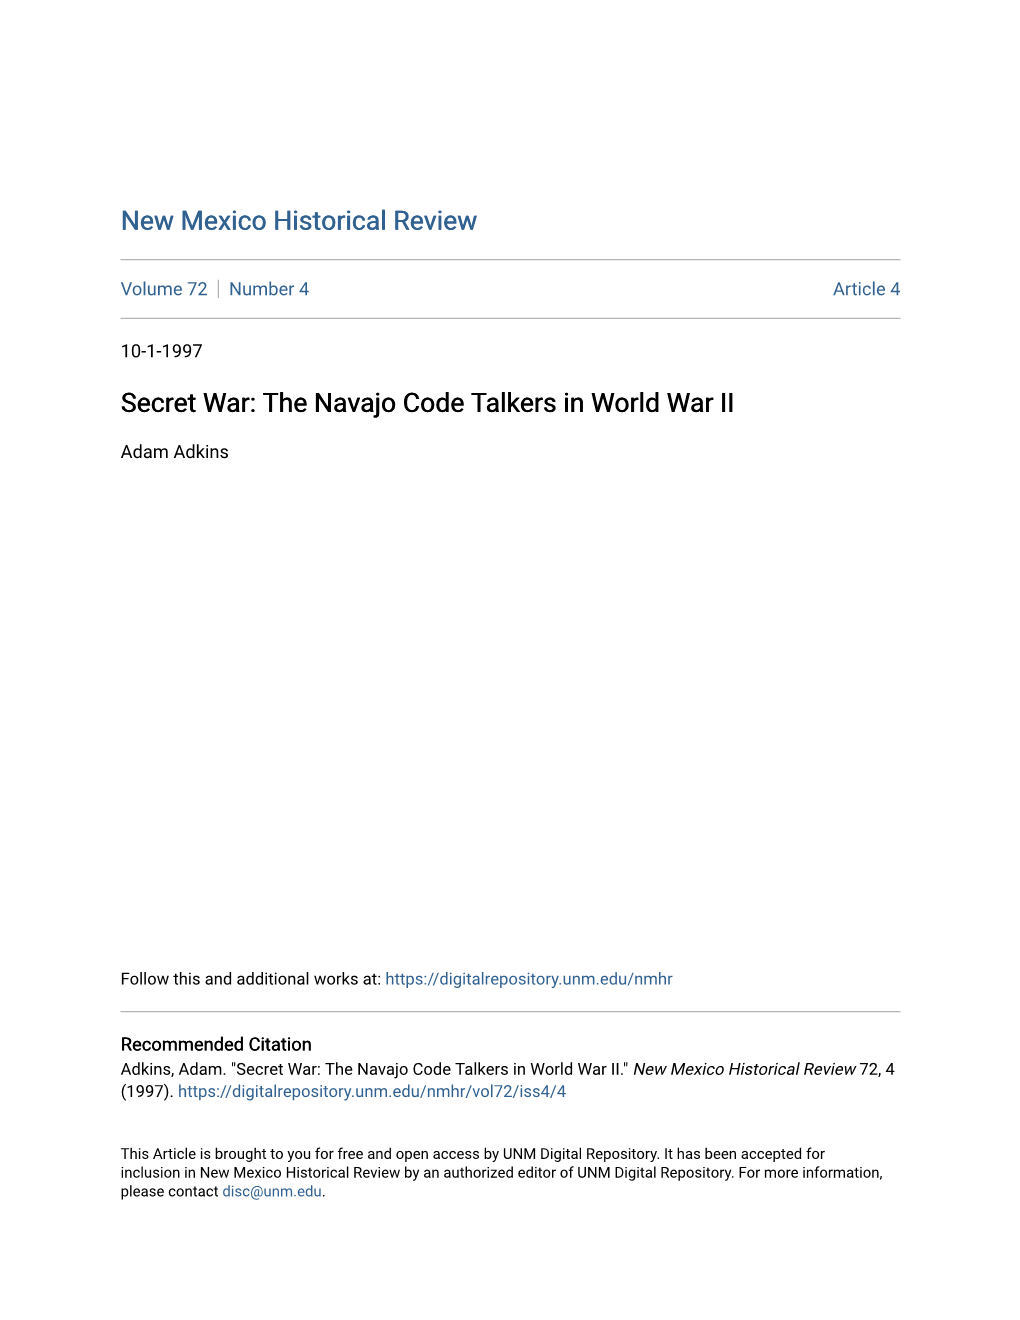 Secret War: the Navajo Code Talkers in World War II